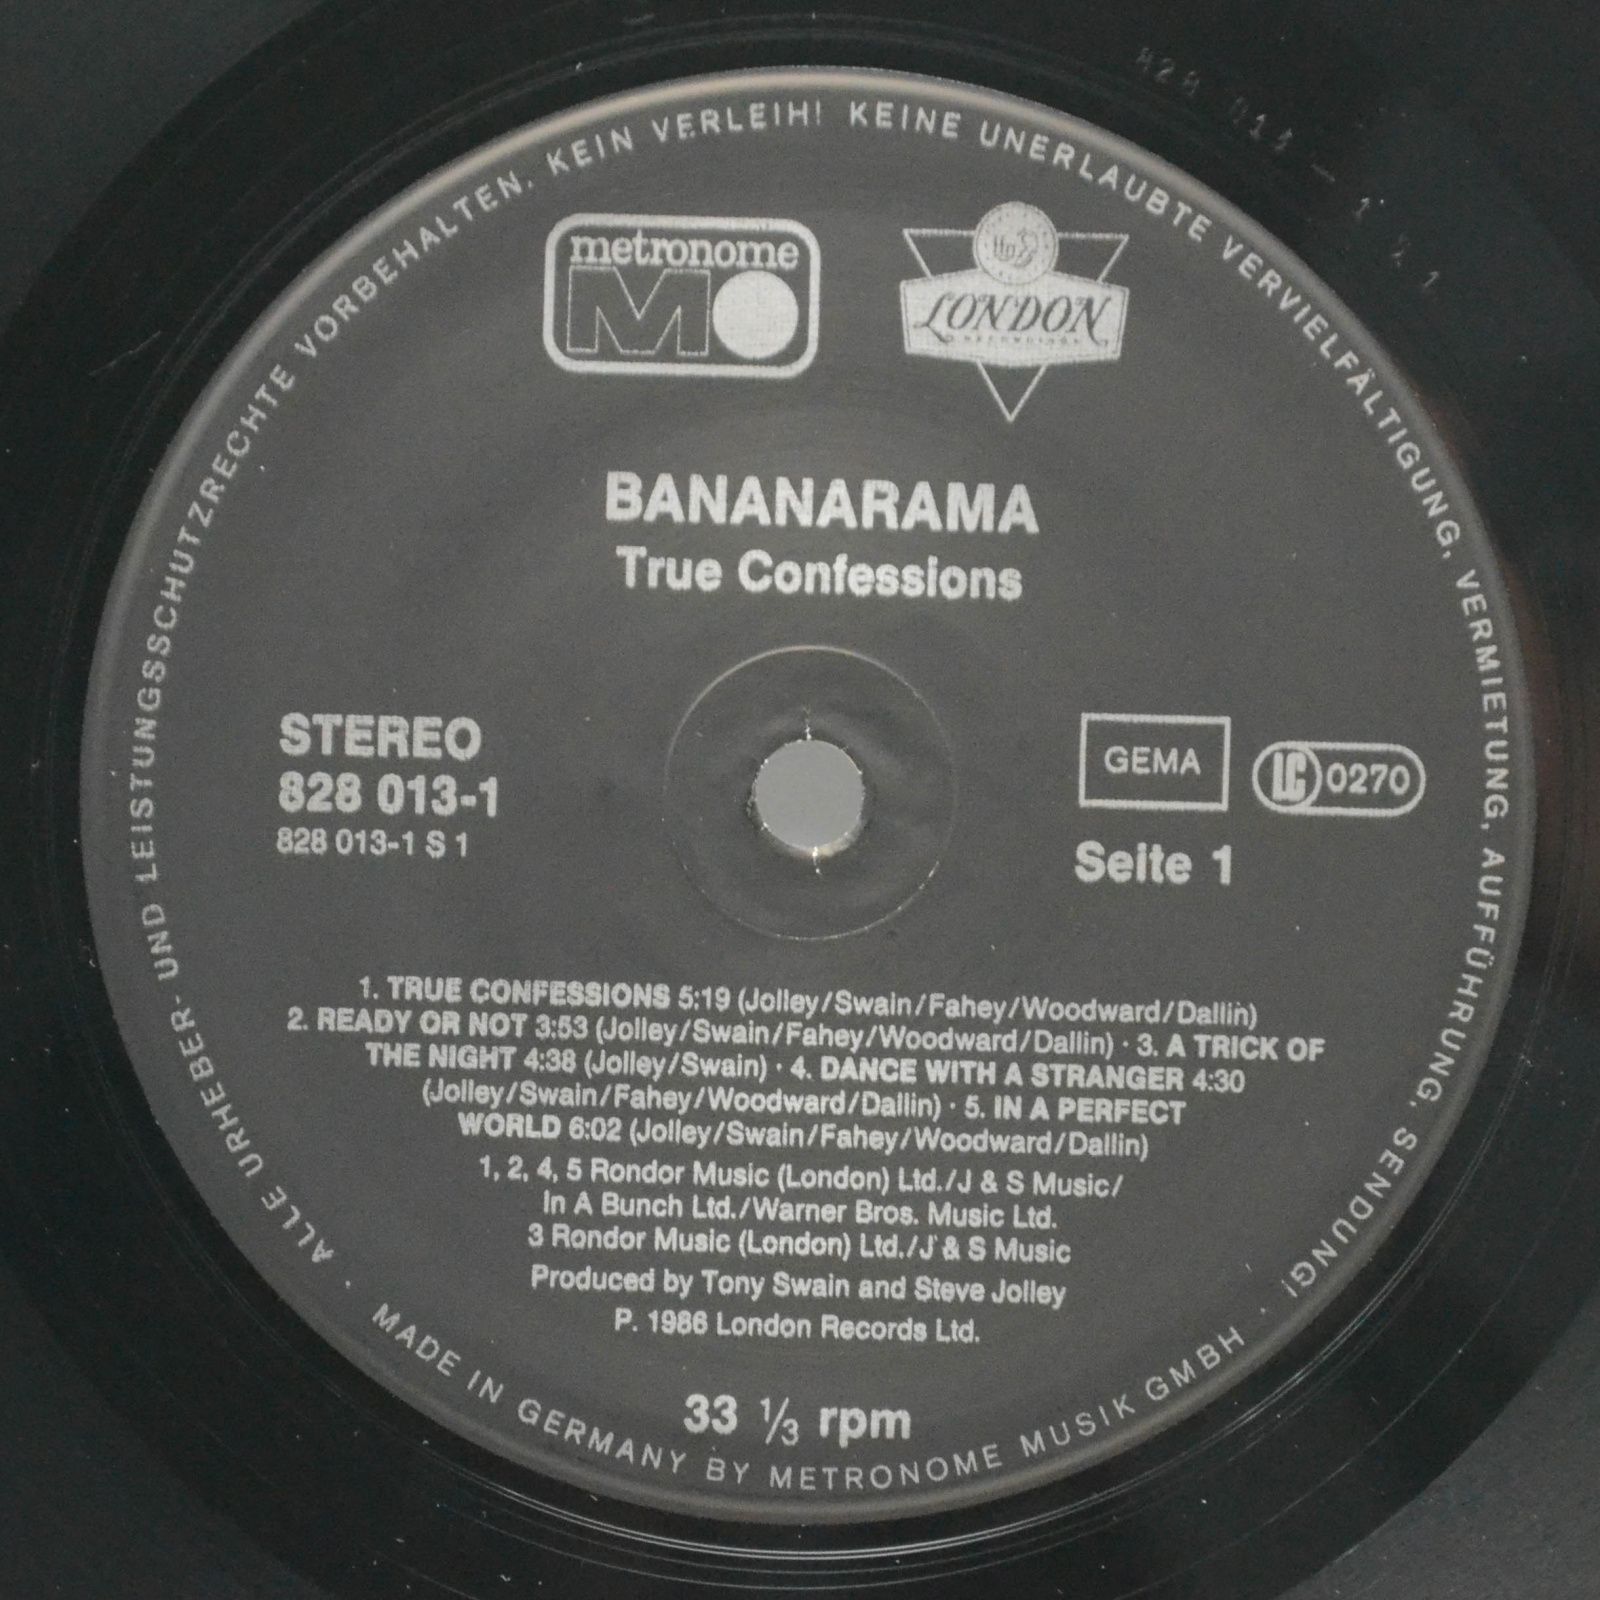 Bananarama — True Confessions, 1986